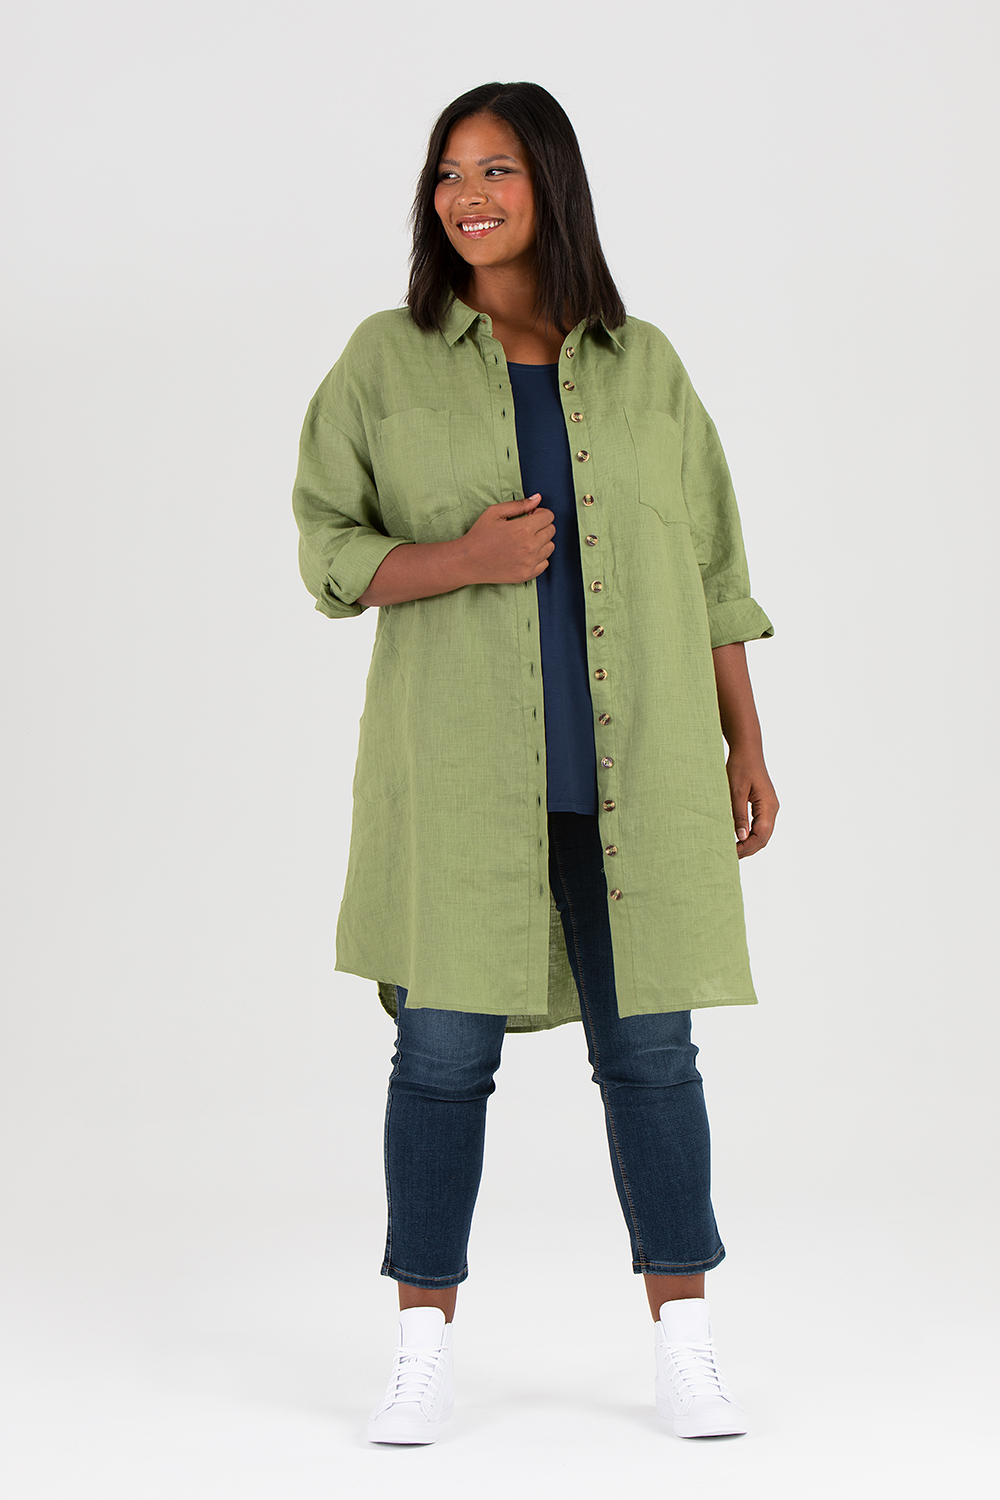 Mynta dress / shirt green